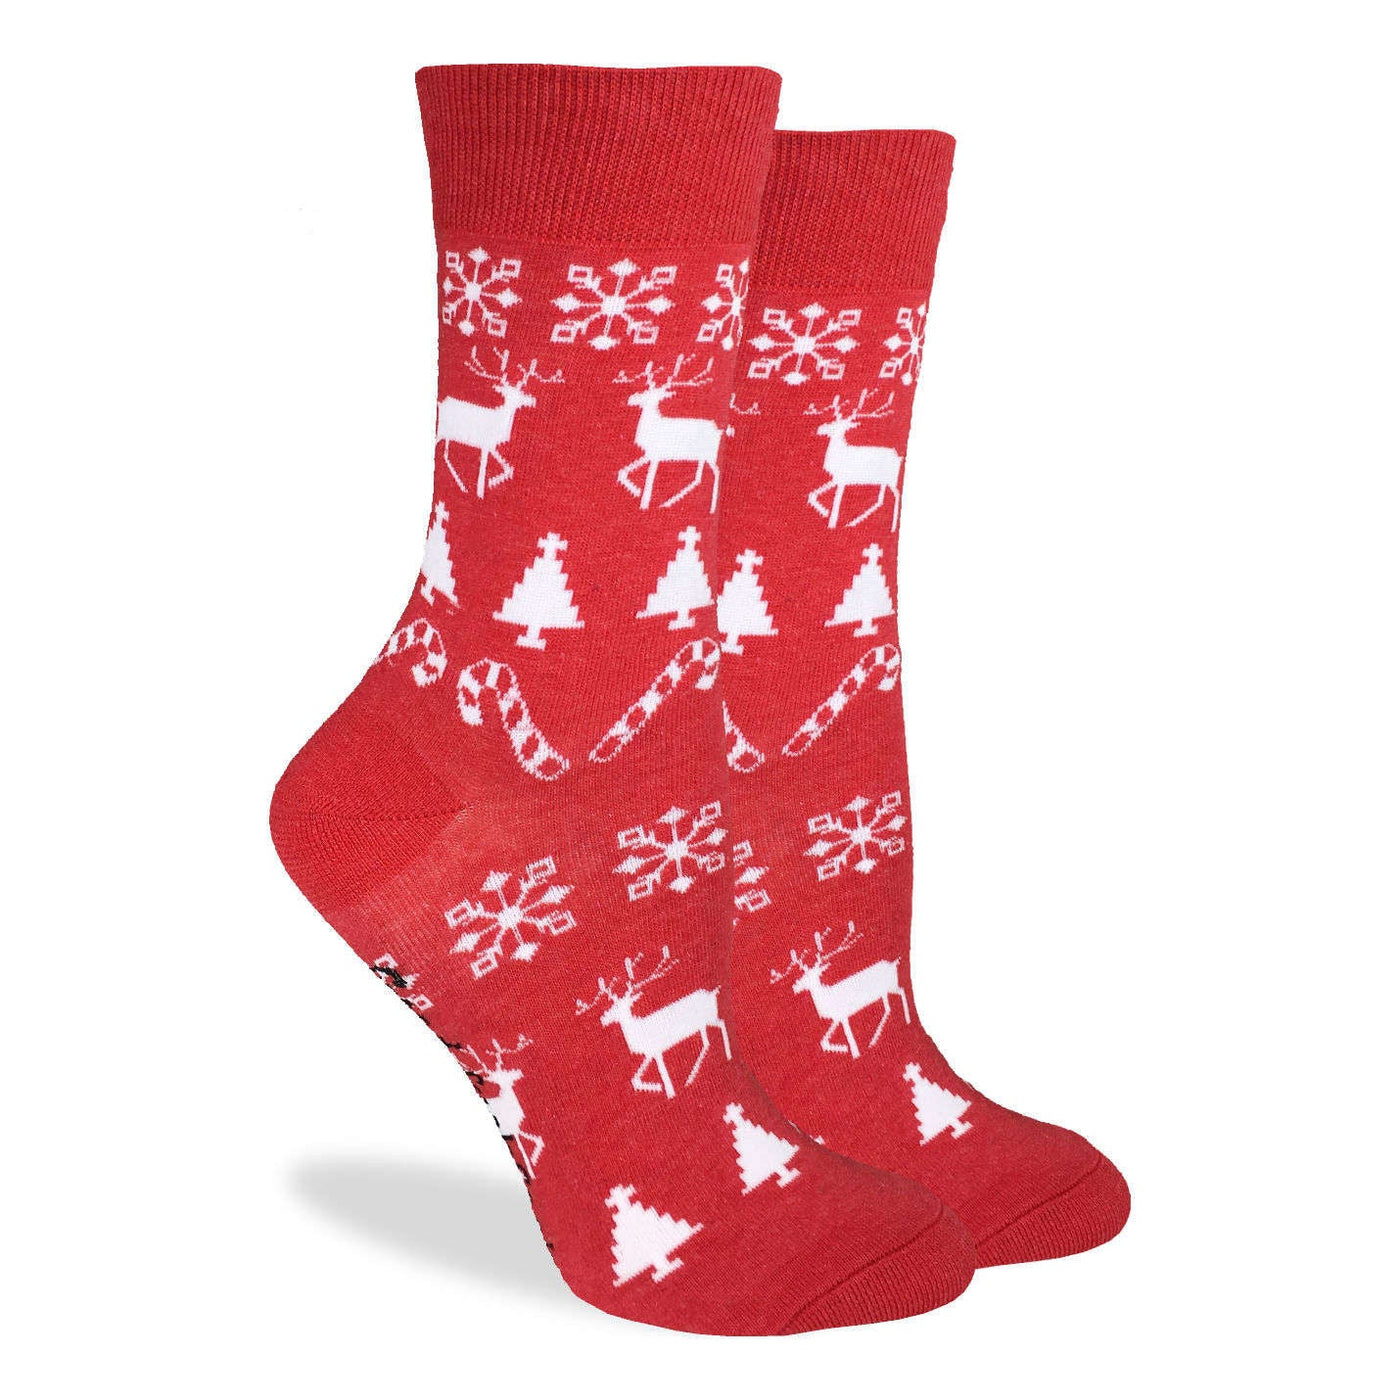 "Christmas Holiday" Cotton Crew Socks by Good Luck Sock